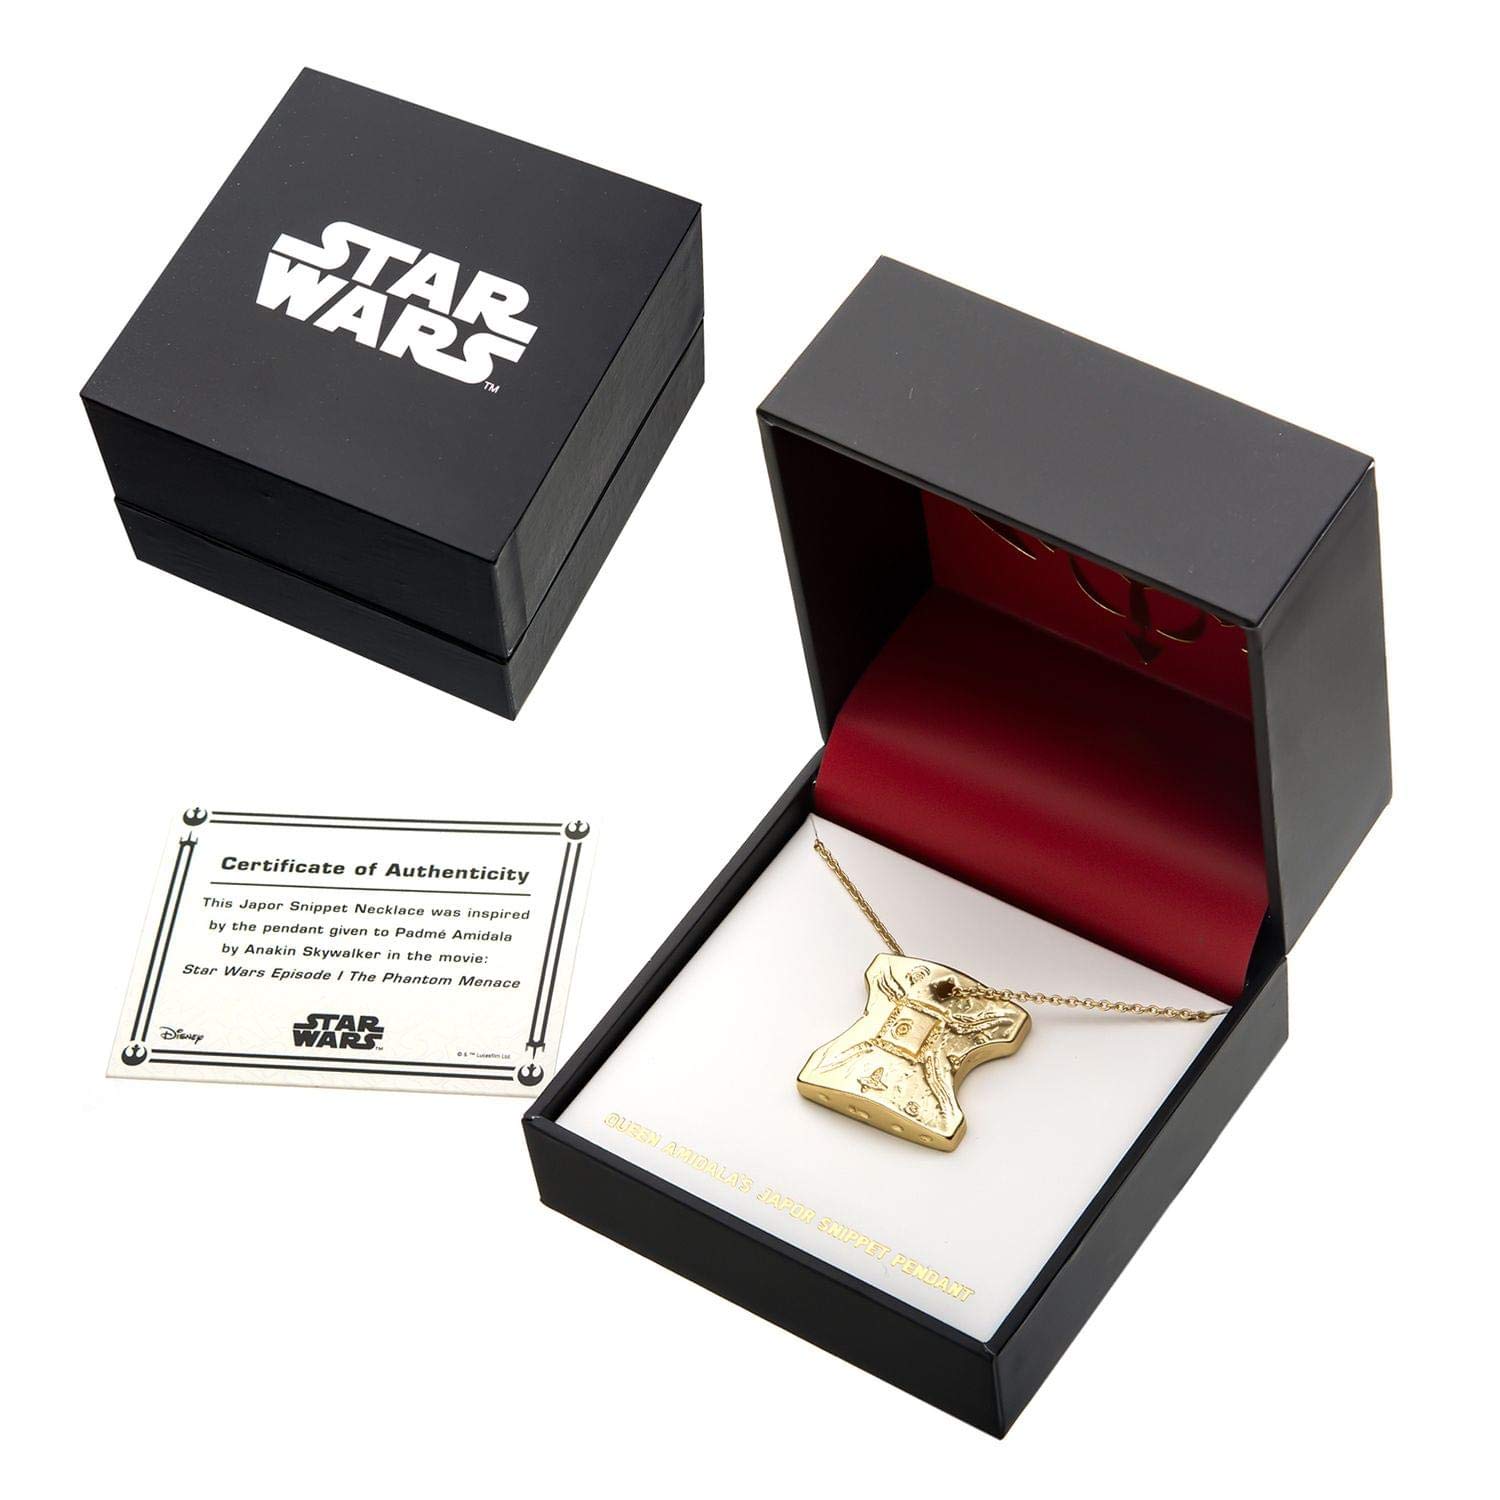 Body Vibe x Star Wars Padme' Amidala Japor Snippet Replica Necklace on Amazon